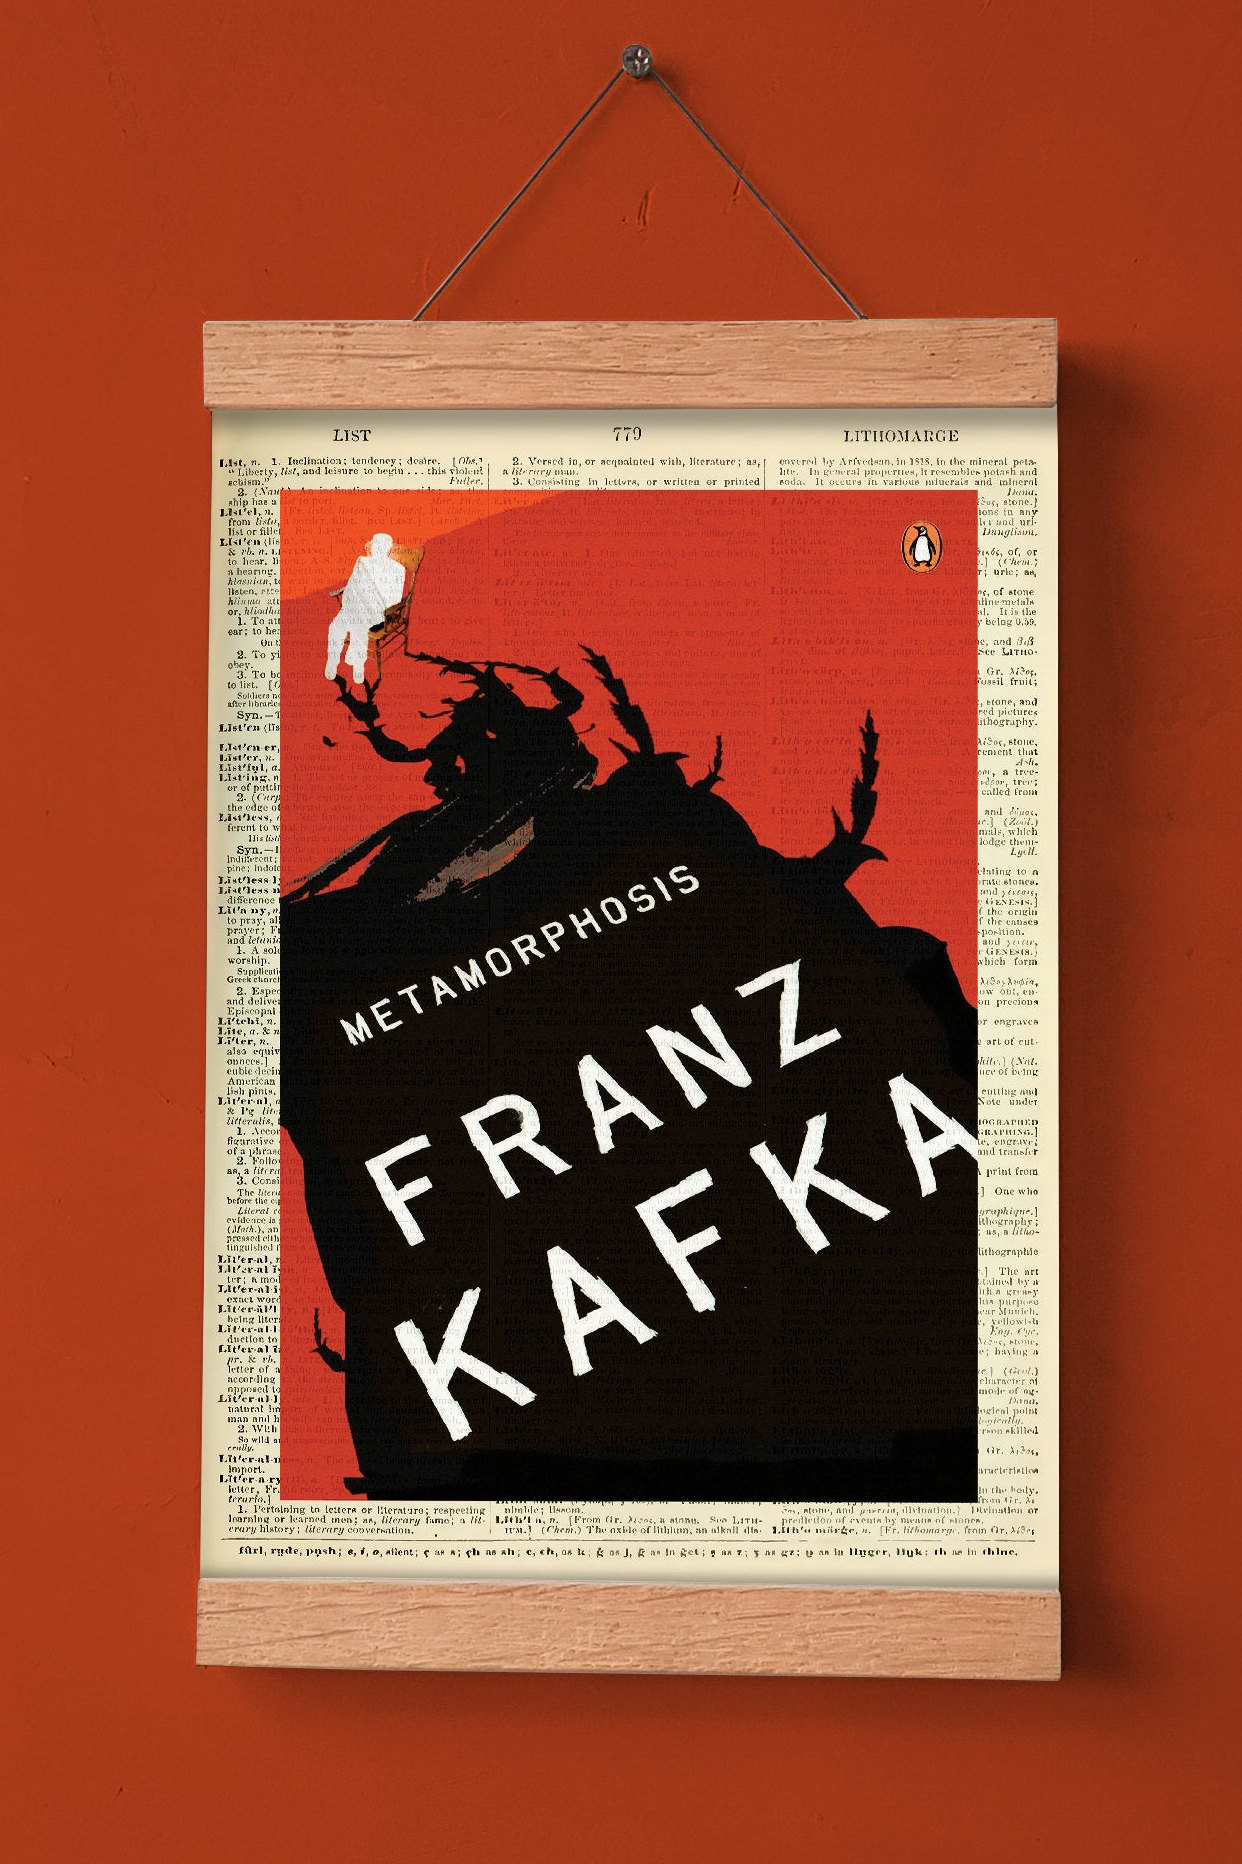 metamorphosis by franz kafka essay